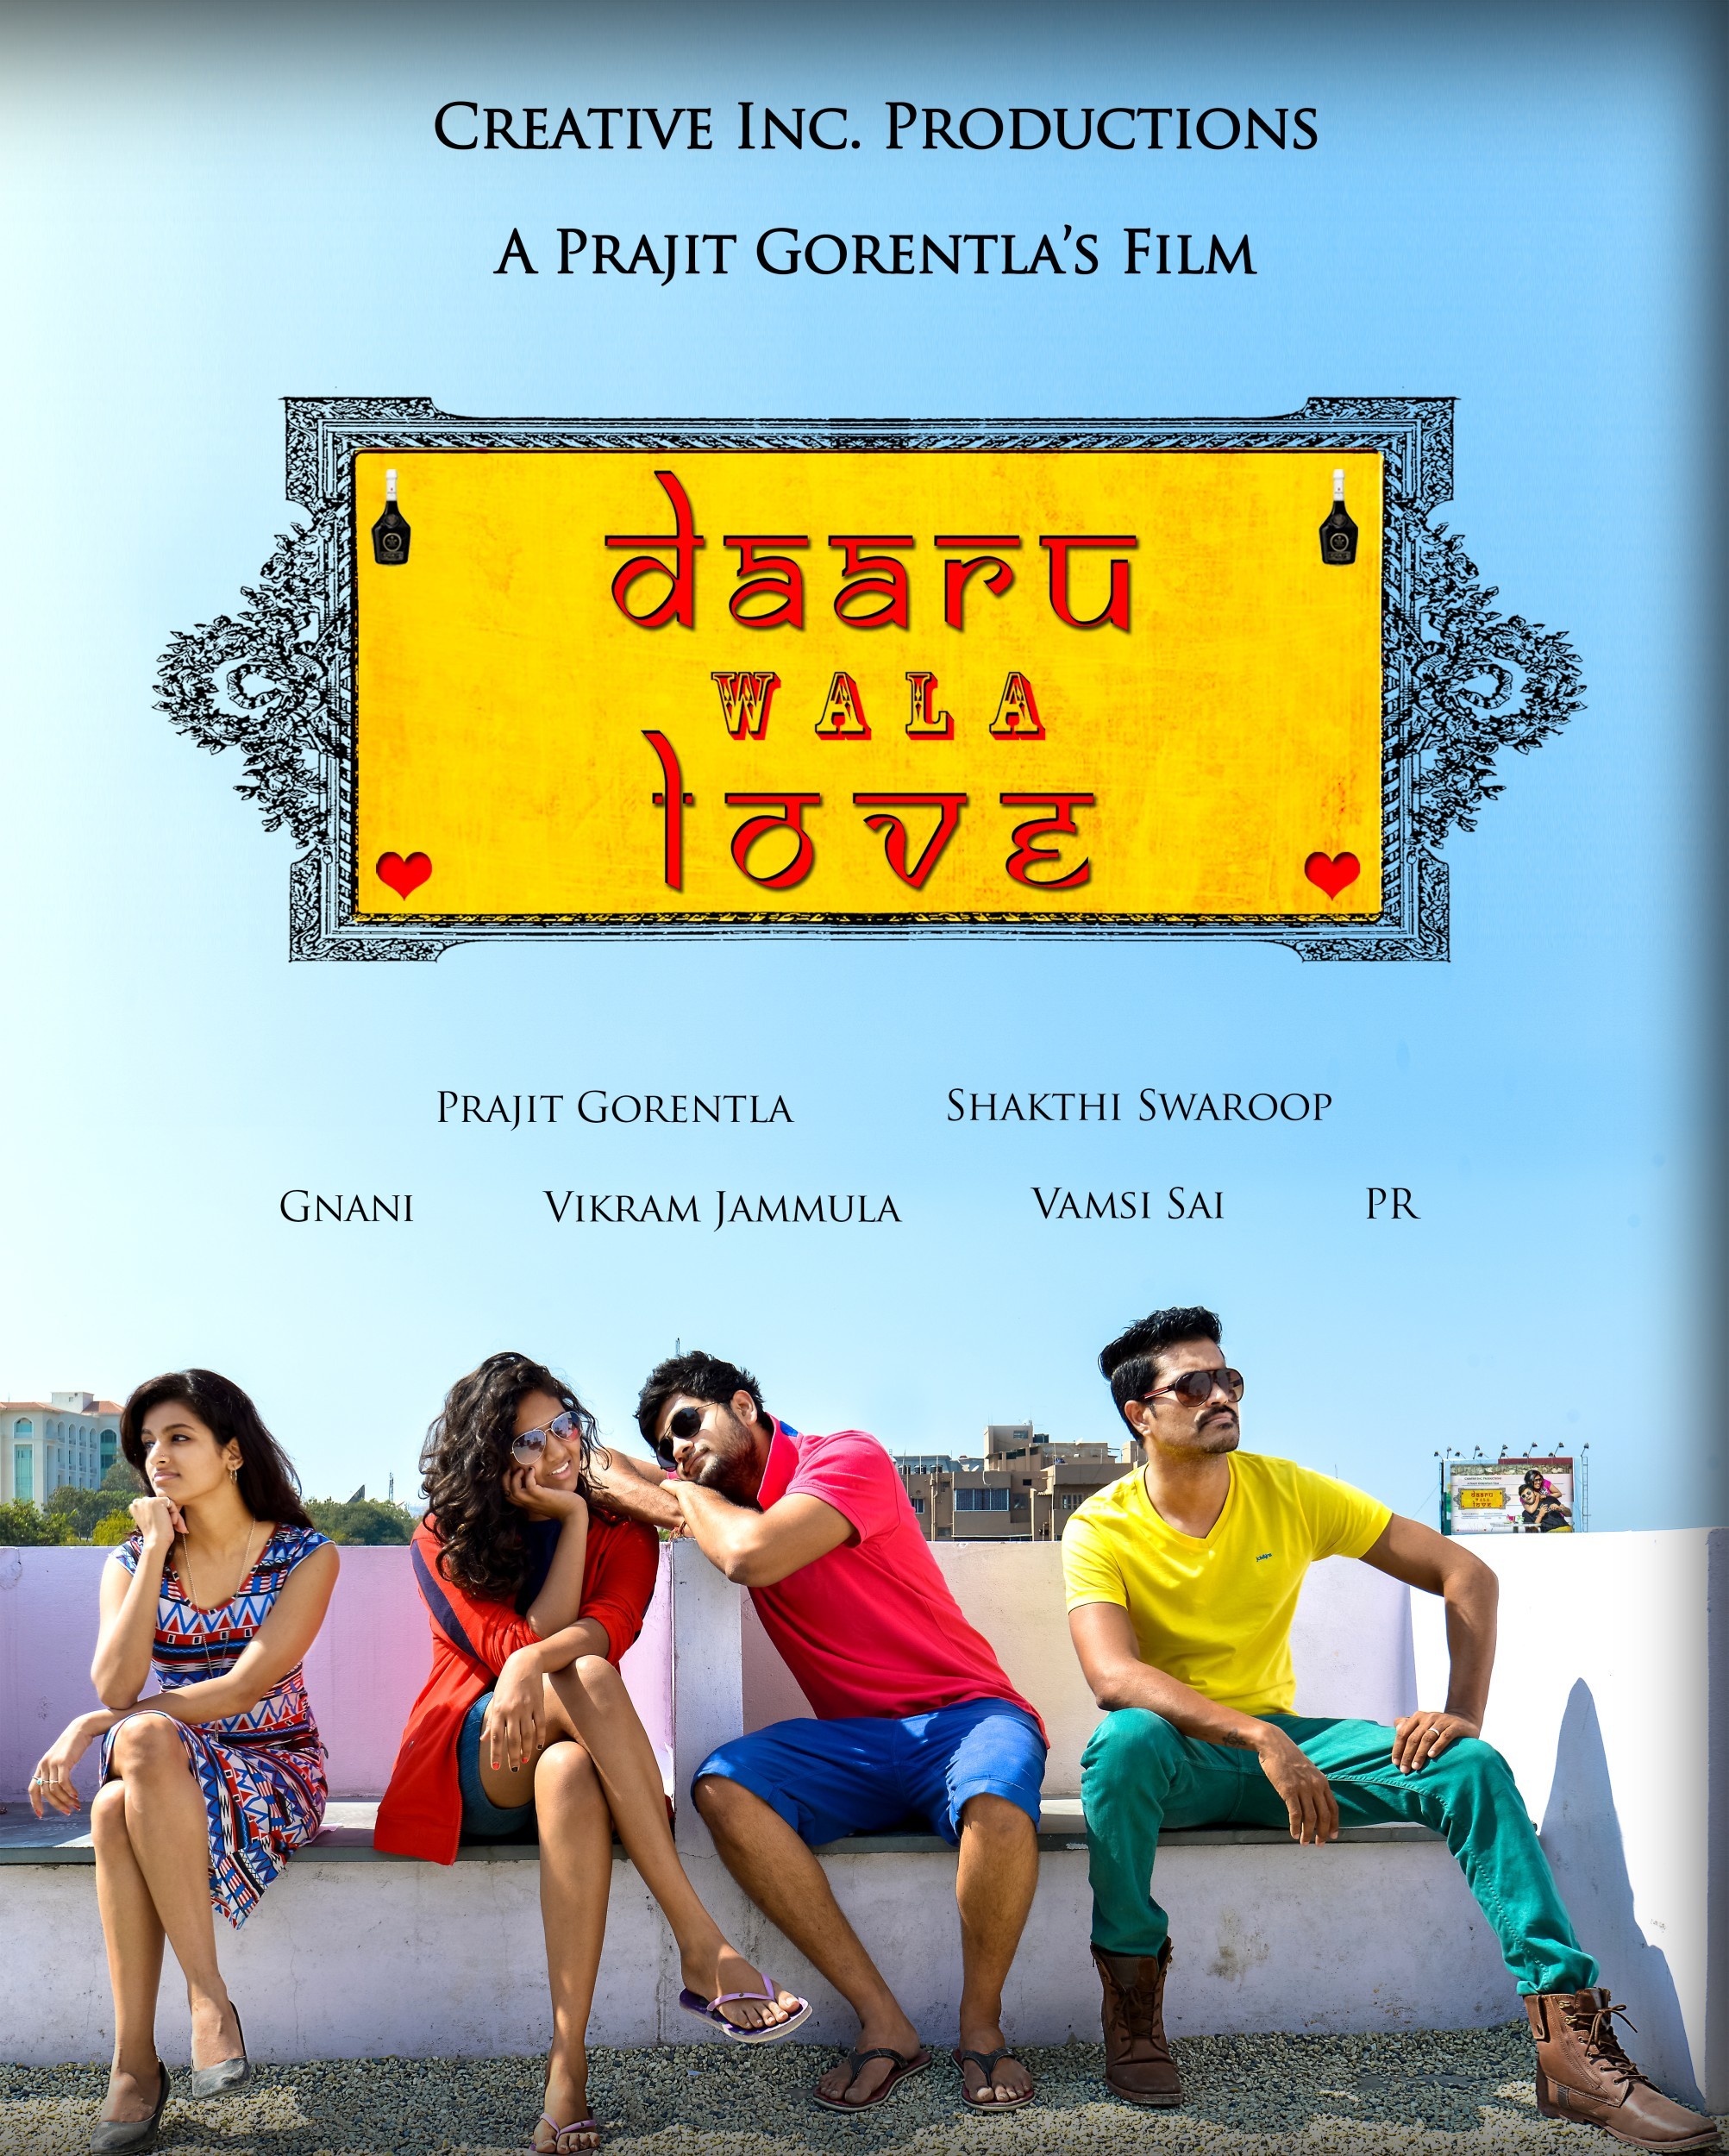 Mega Sized Movie Poster Image for Daaru Wala Love